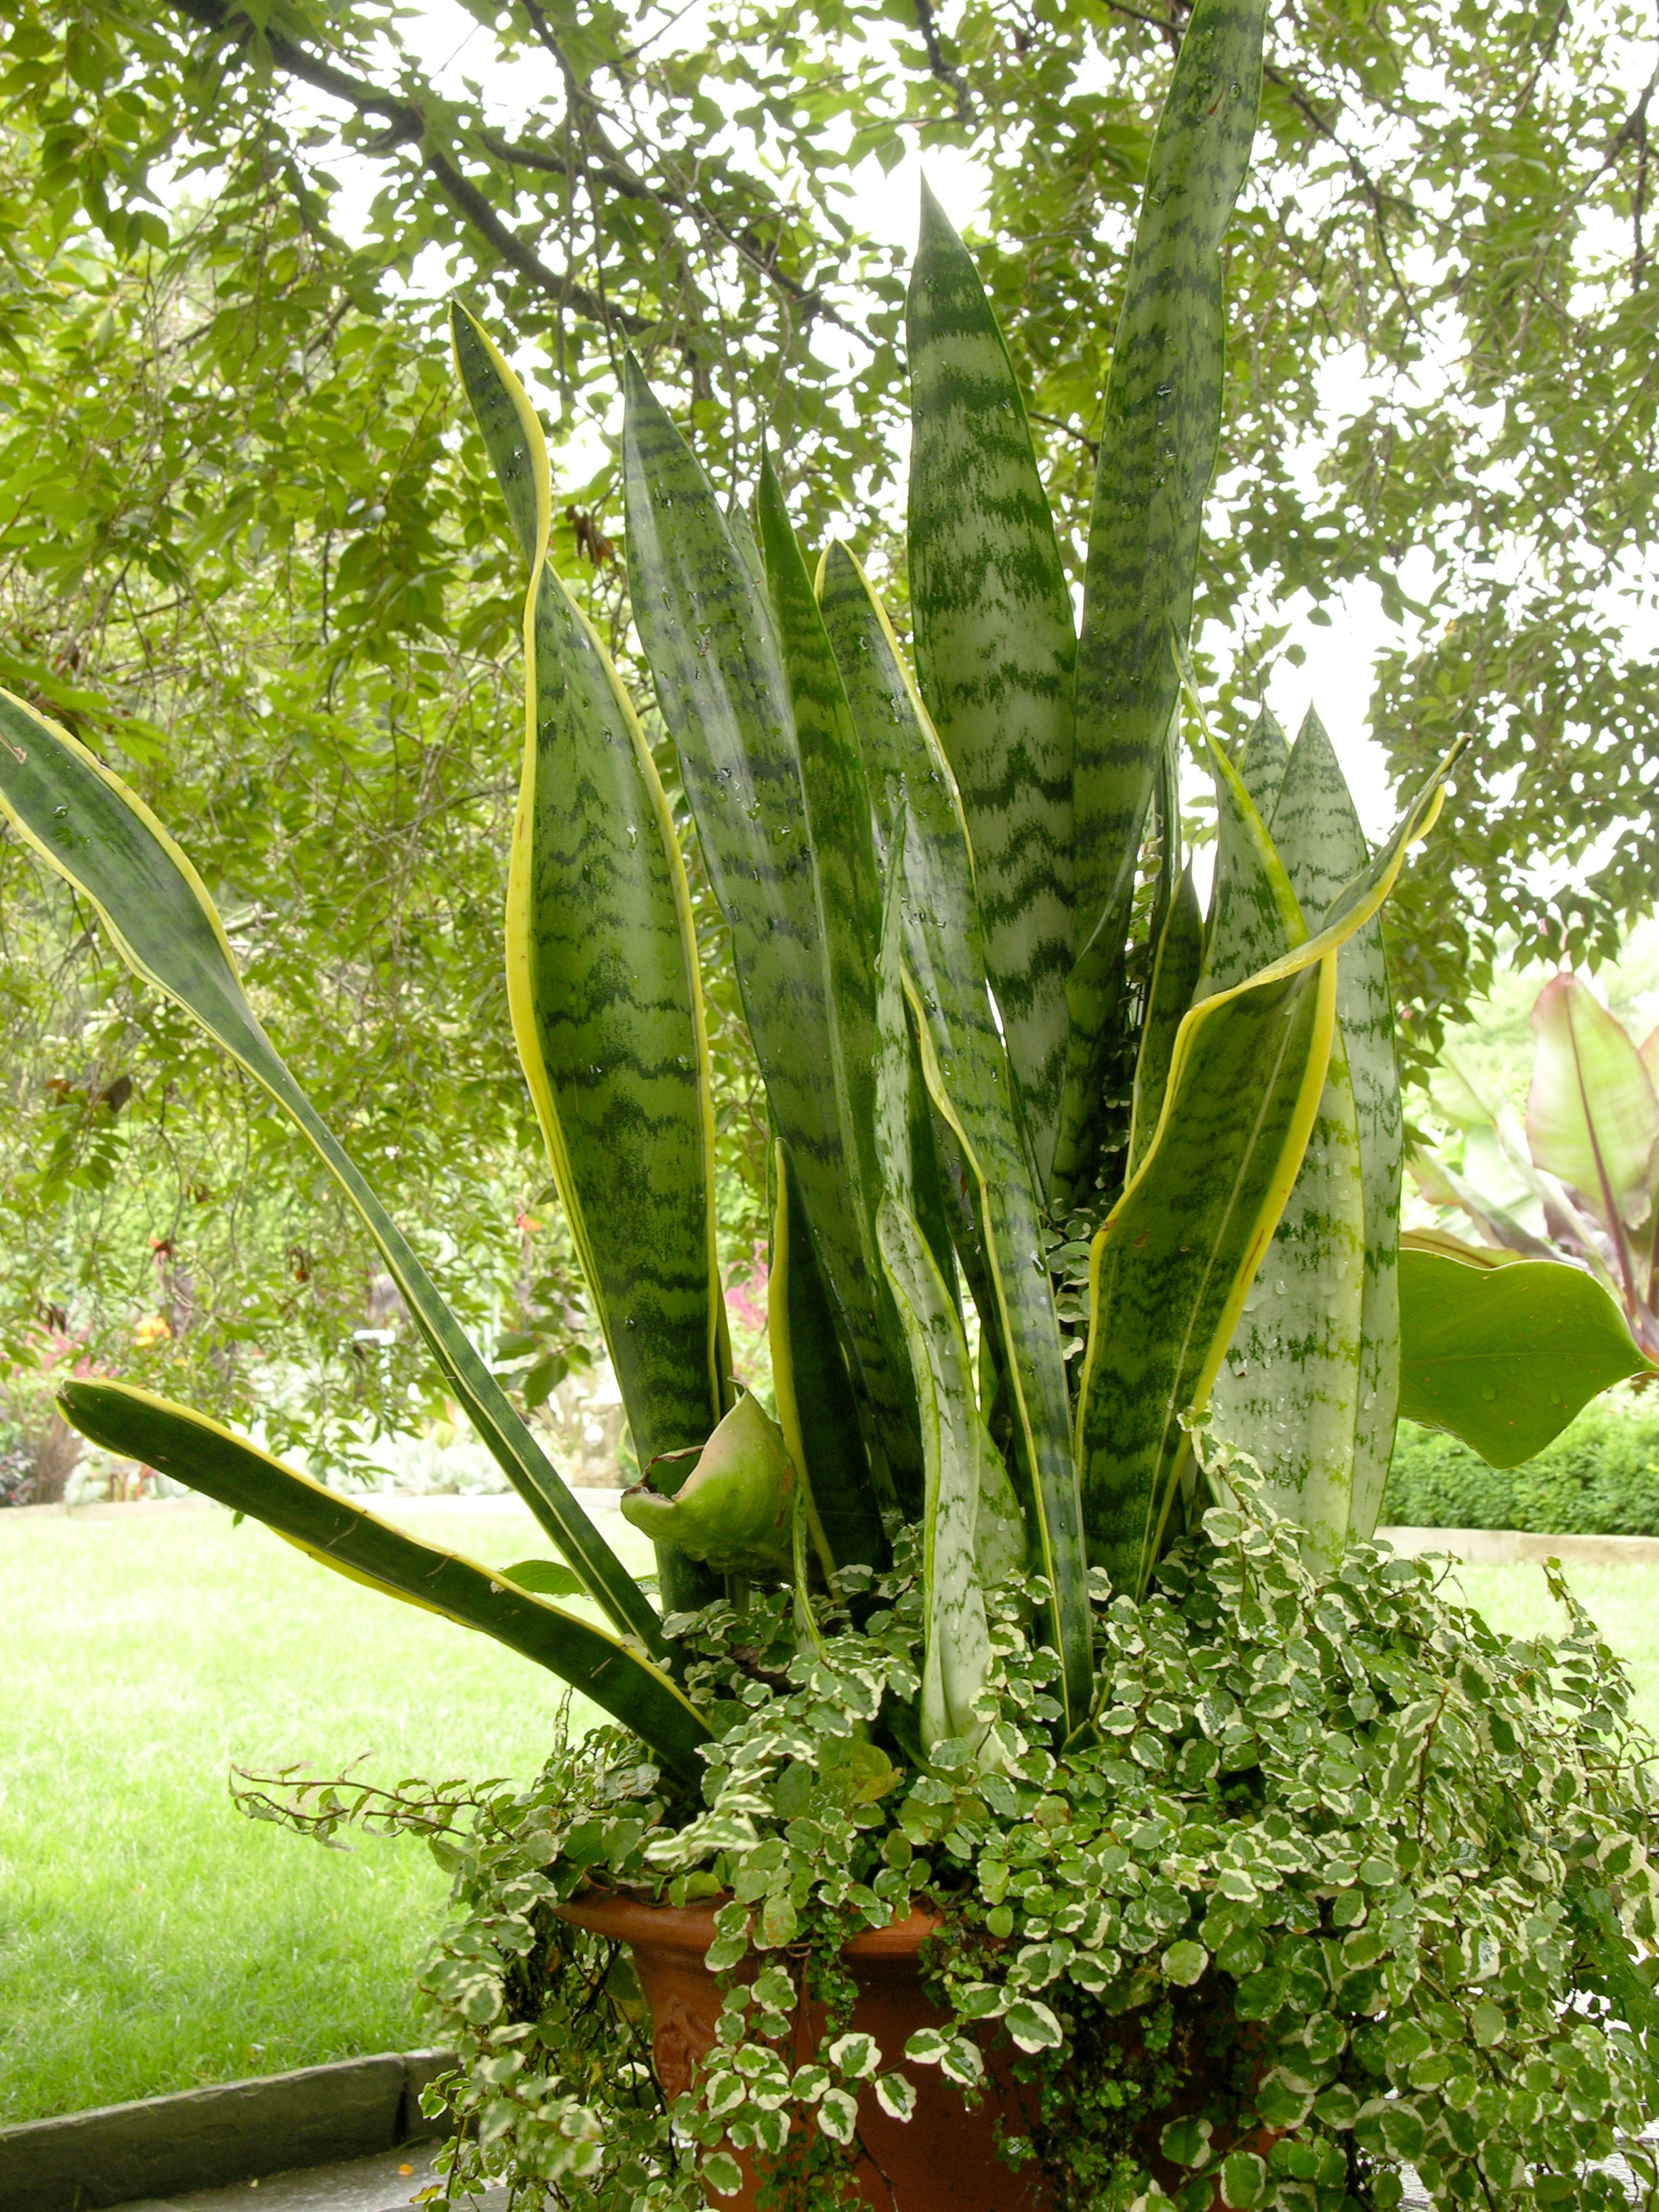 File:Sansevieria trifasciata and Ficus pumila 'Variegata' 2448px.jpg